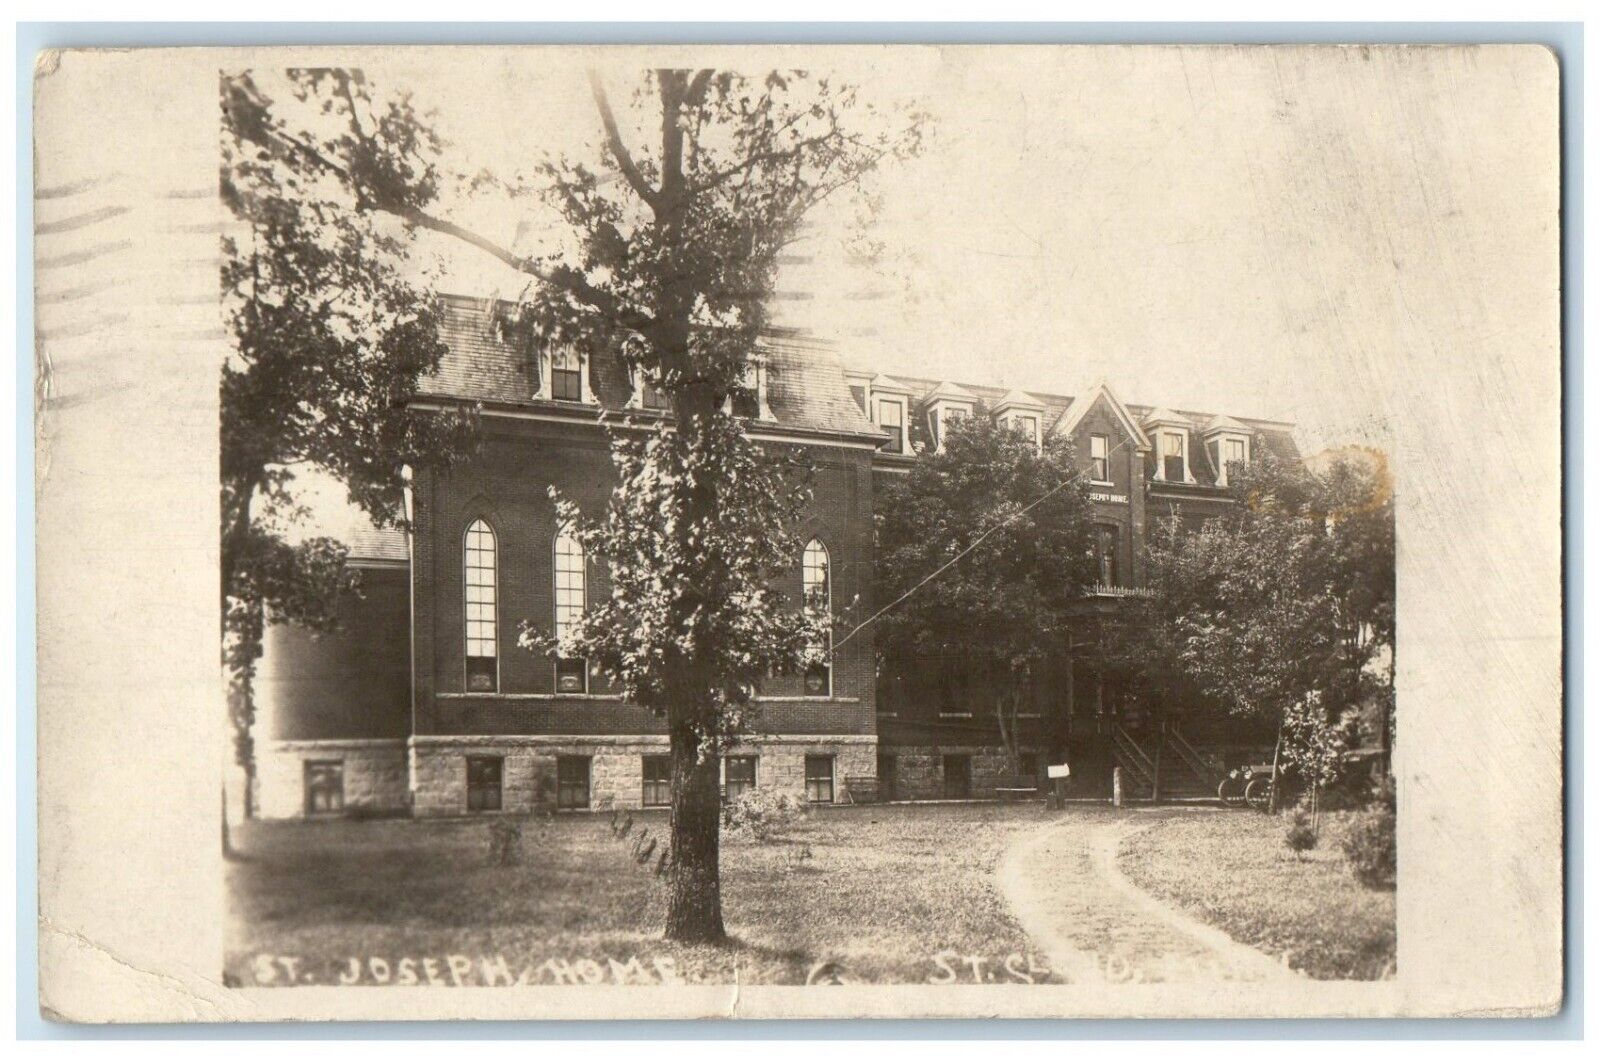 1921 St. Joseph Home Saint Cloud Minnesota MN RPPC Photo Vintage Postcard